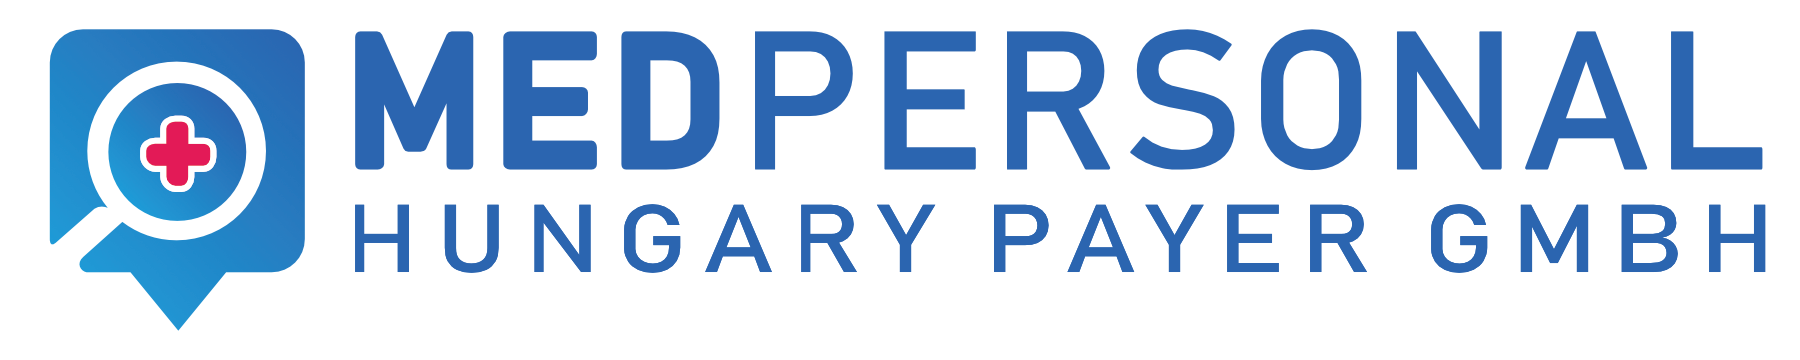 MedPersonal Hungary Payer GmbH